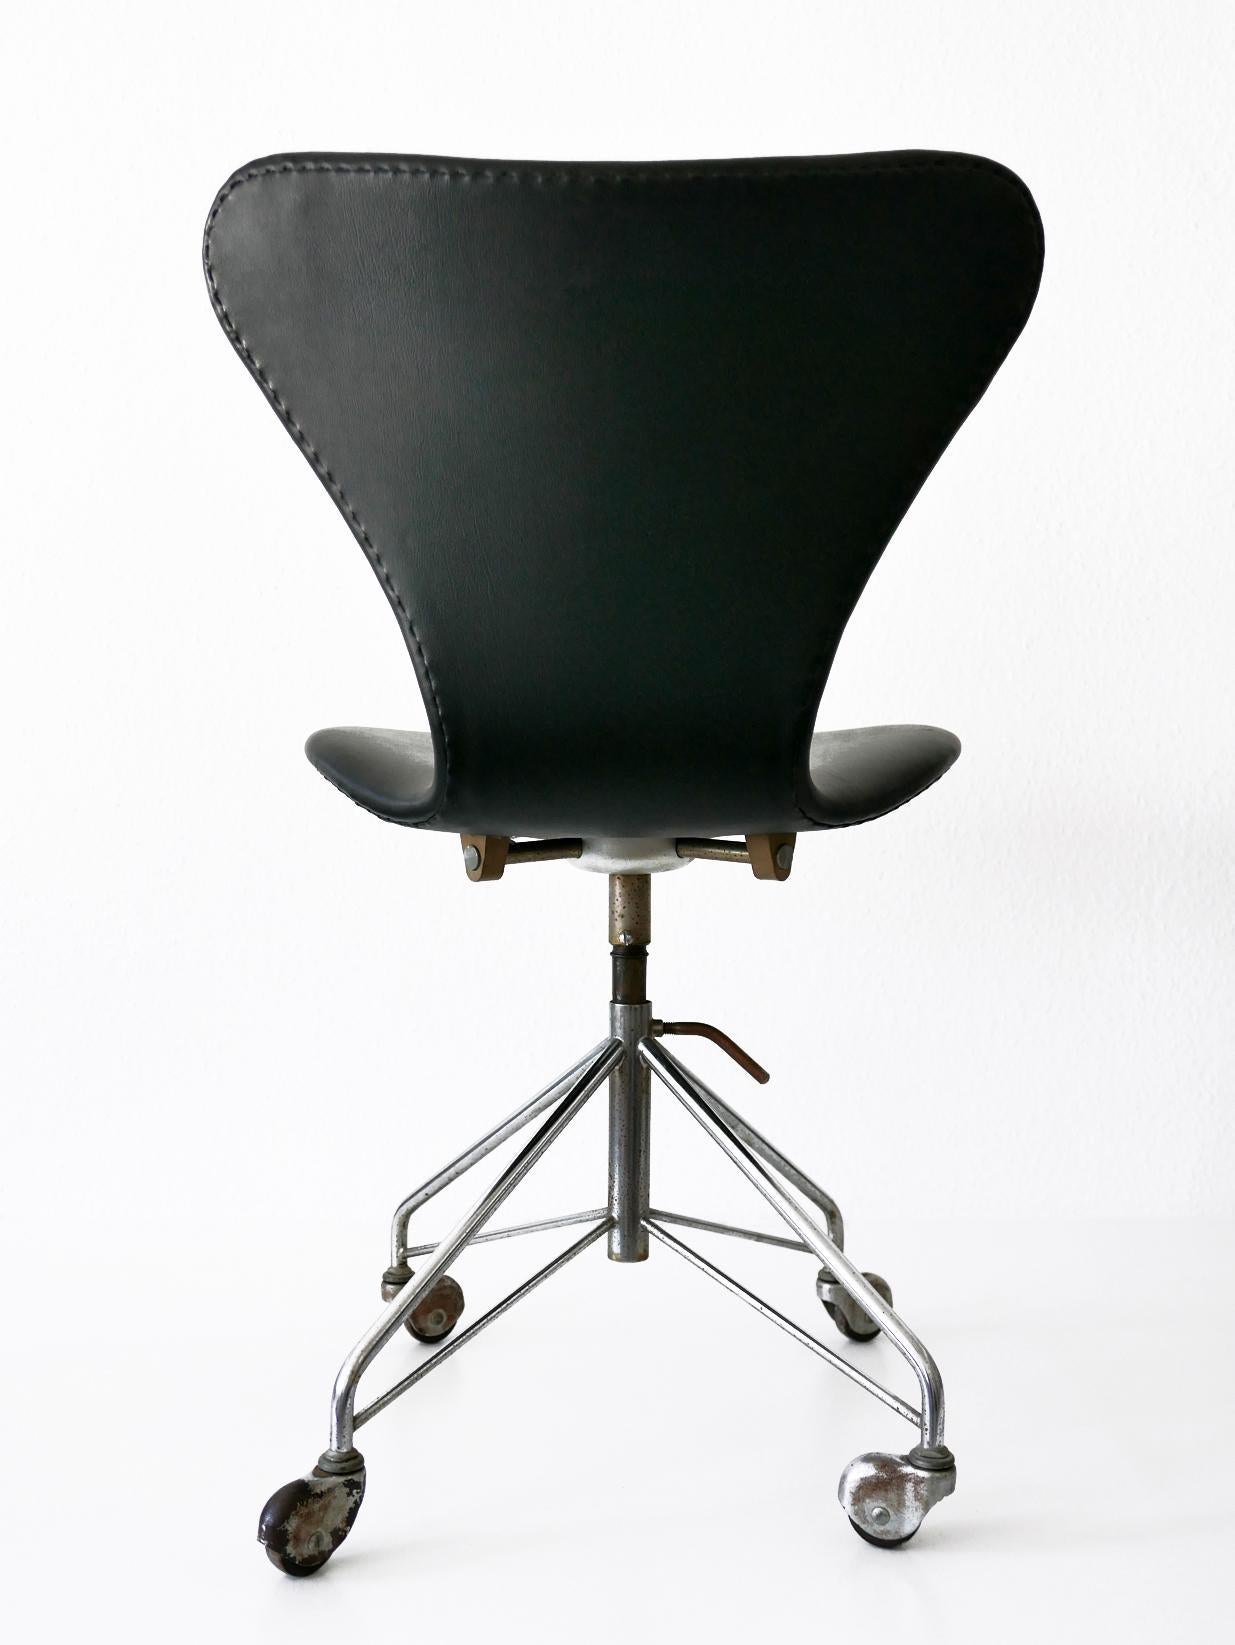 Steel Mid-Century Modern Office Chair 3117 by Arne Jacobsen for Fritz Hansen, 1960s For Sale